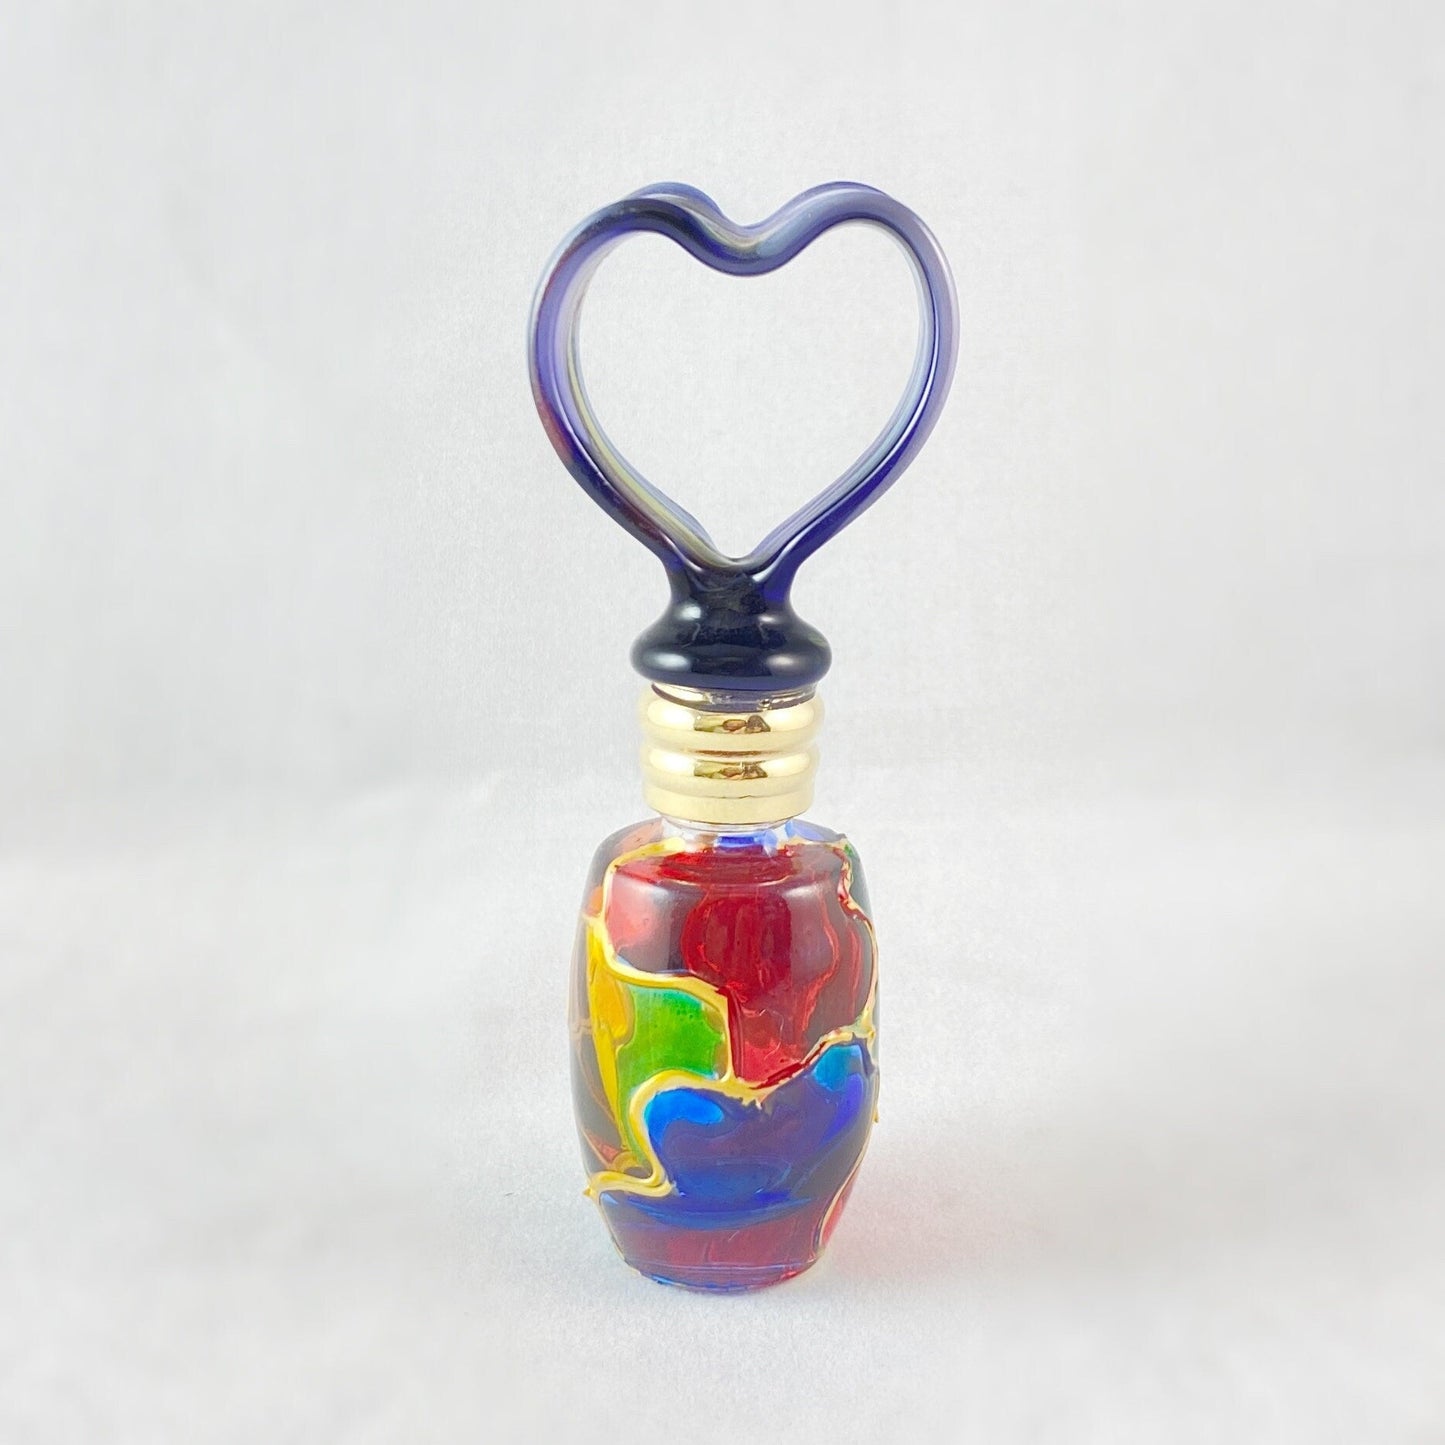 Heart Top Venetian Glass Perfume Bottle - Handmade in Italy, Colorful Murano Glass